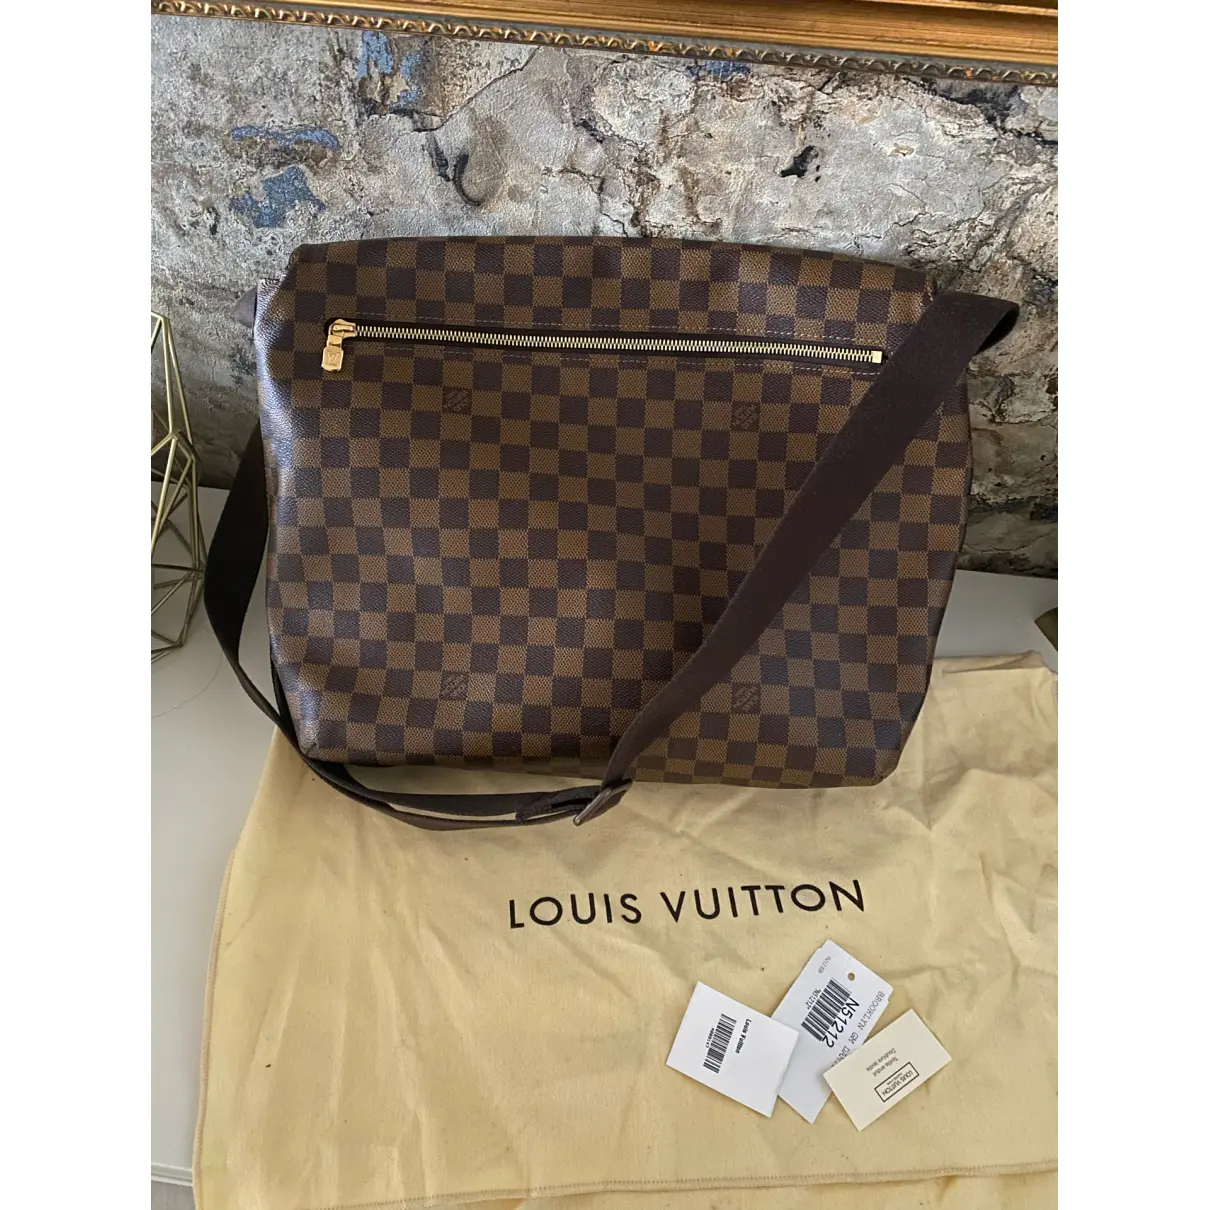 Buy Louis Vuitton Brooklyn cloth satchel online